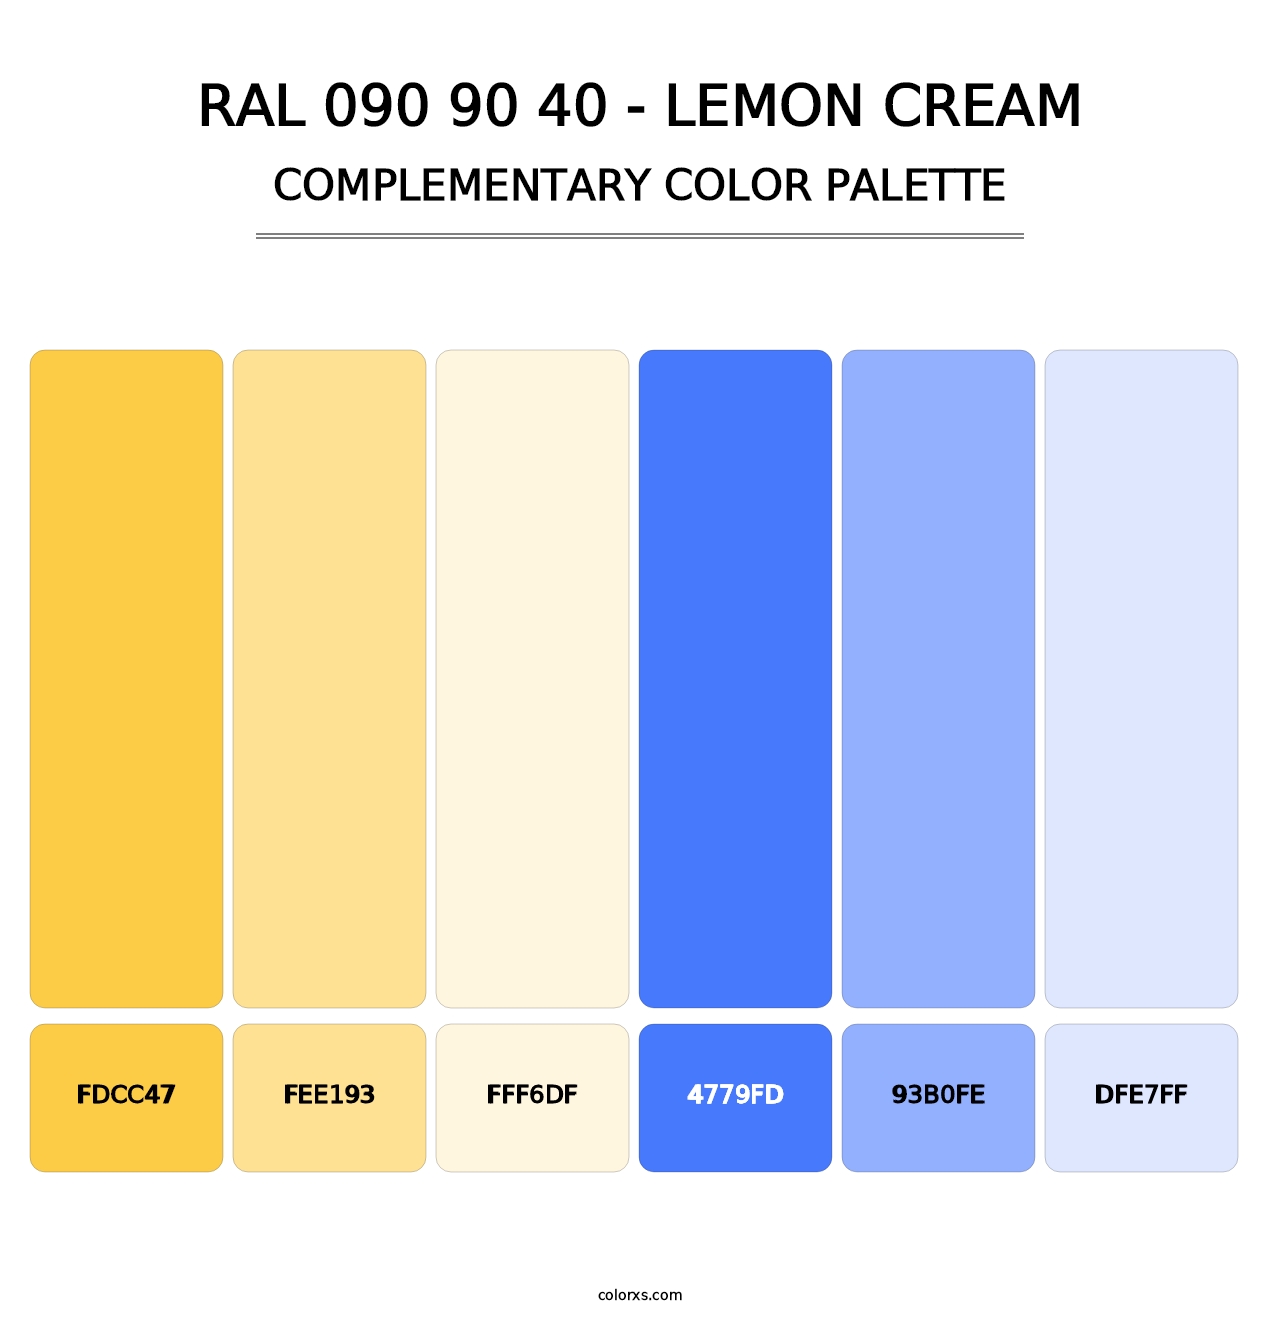 RAL 090 90 40 - Lemon Cream - Complementary Color Palette